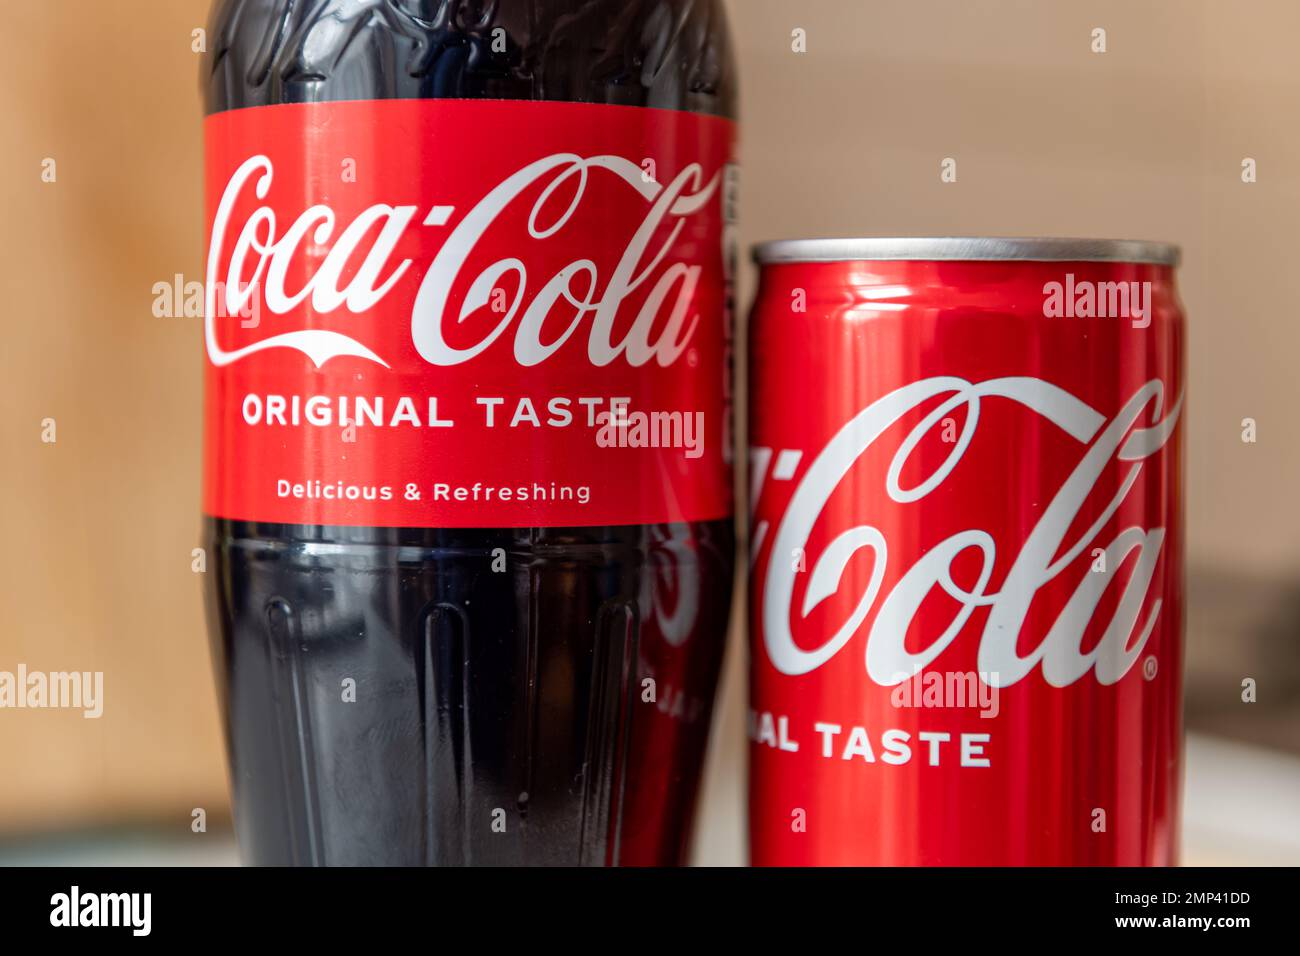 Coke brand -Fotos und -Bildmaterial in hoher Auflösung – Alamy